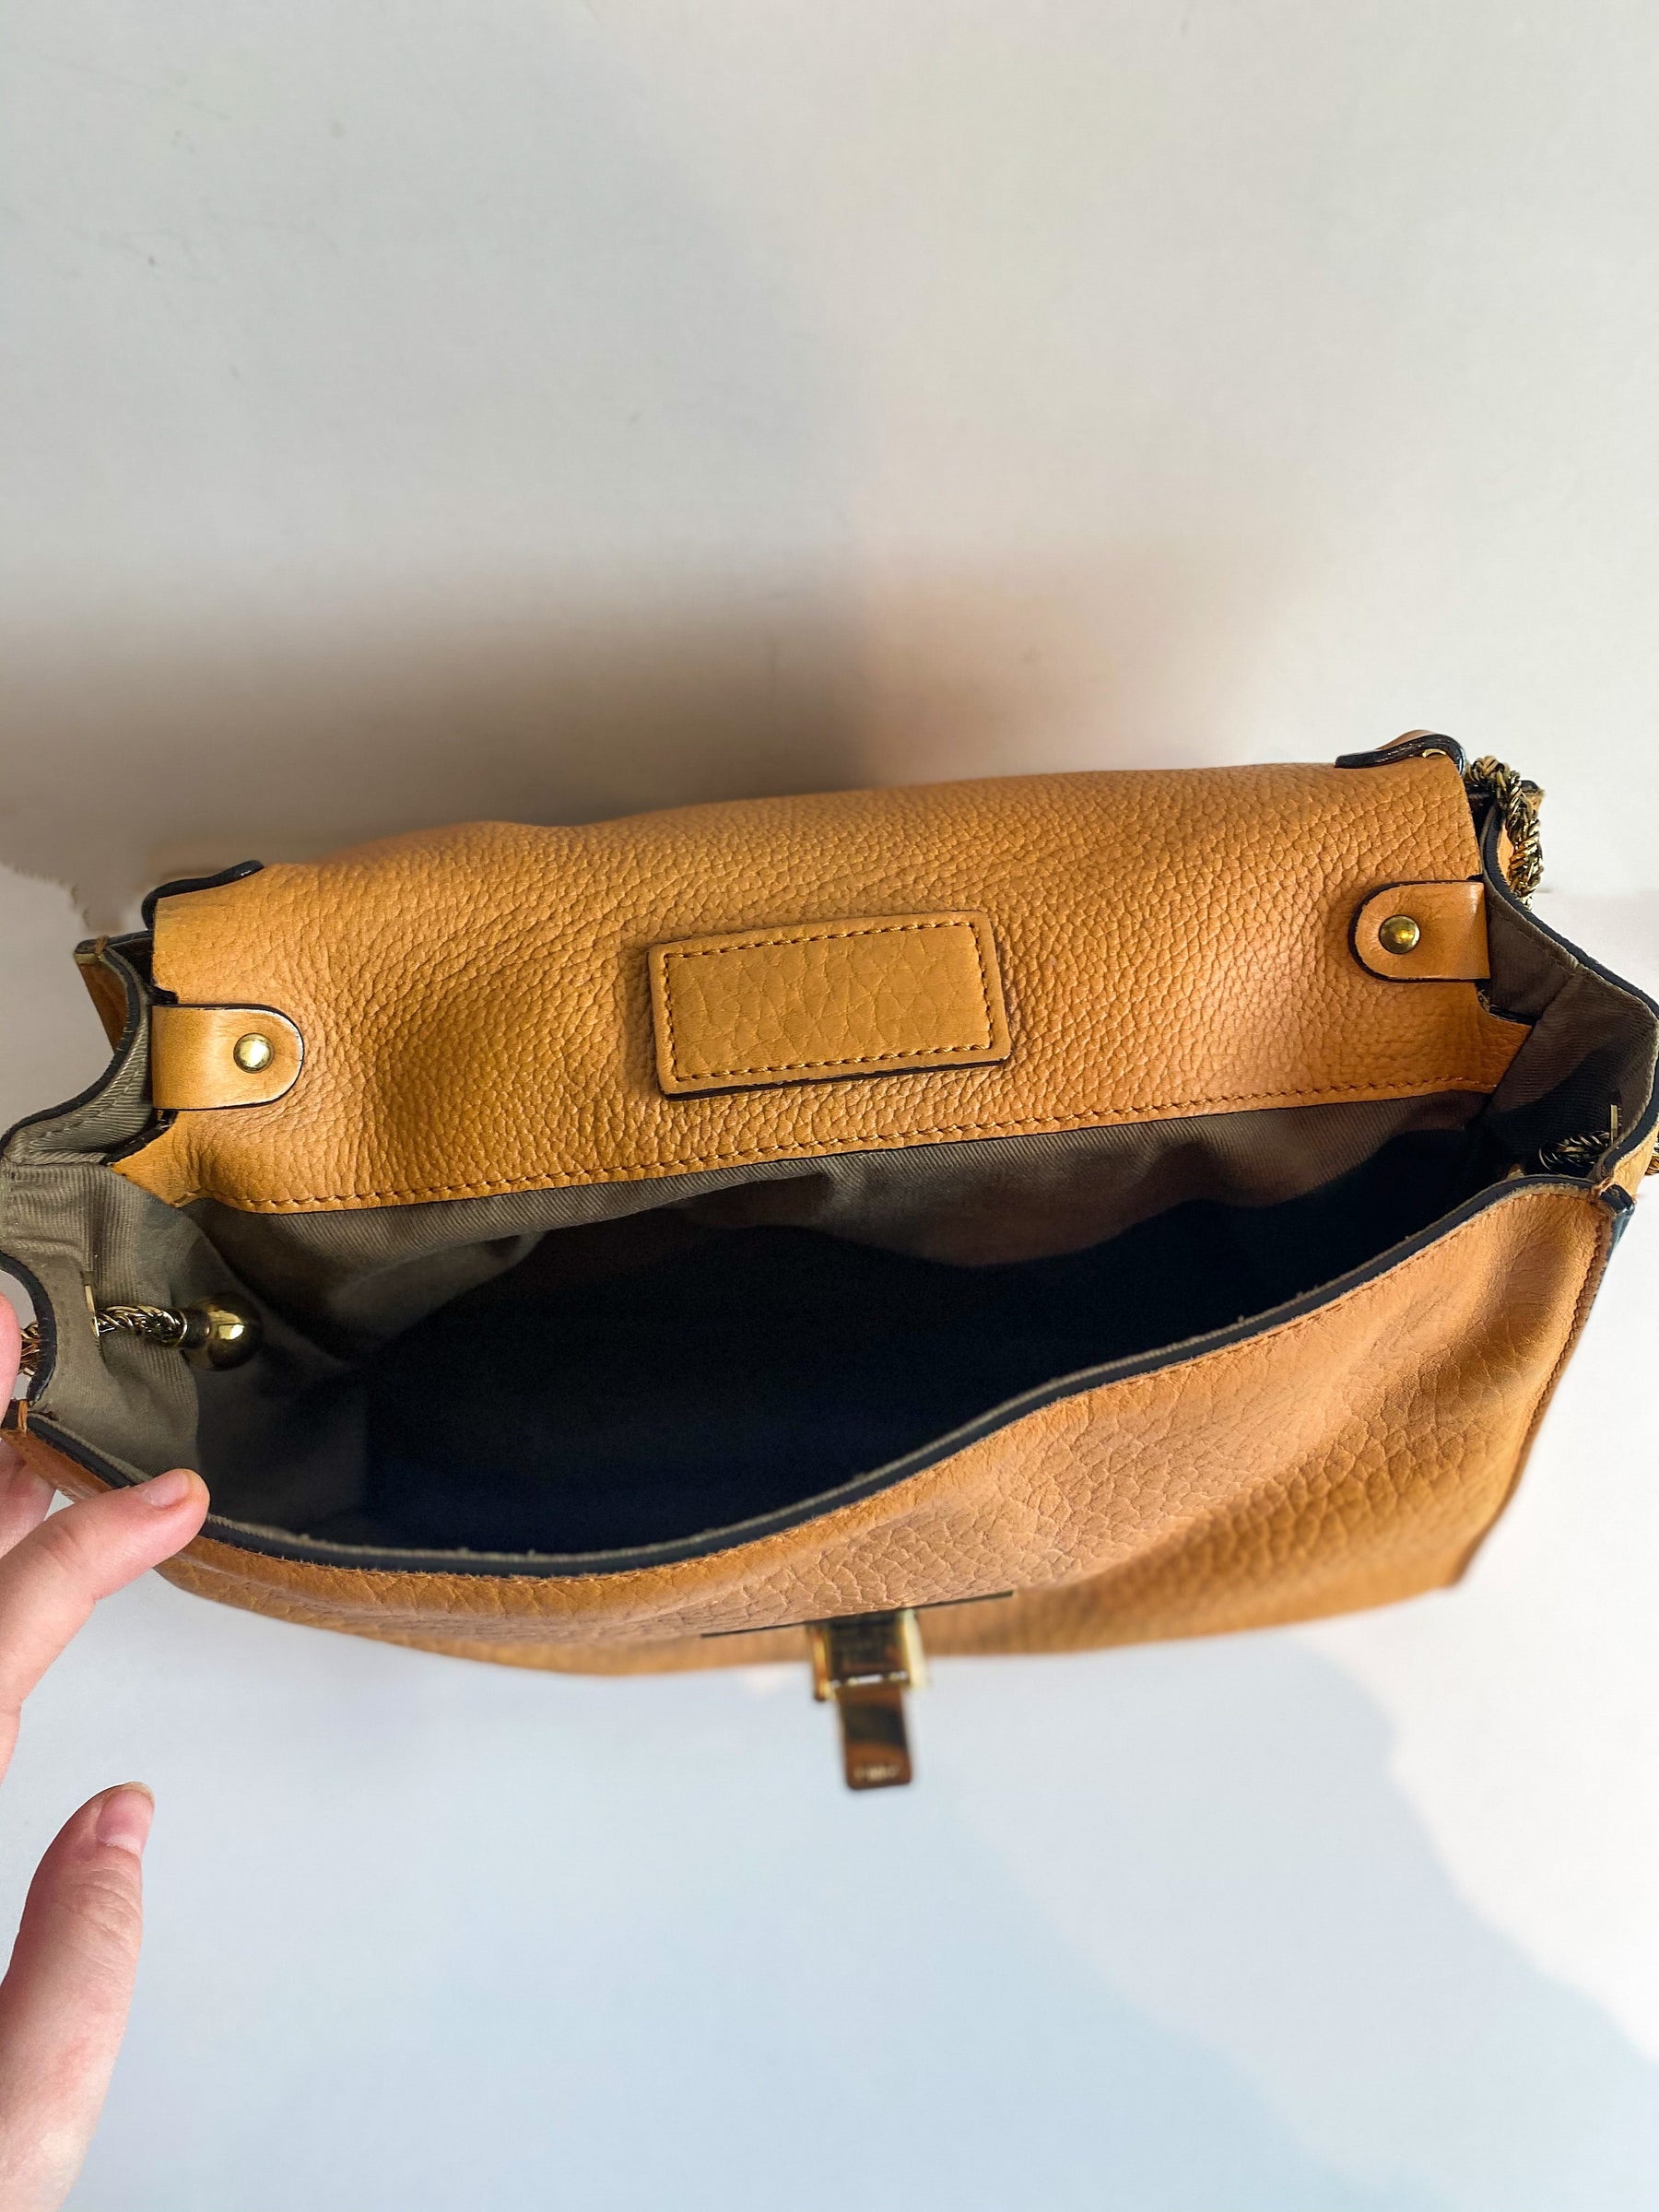 Chloe Sally Bag Flap Handbag Tan Leather Front Flap Interior